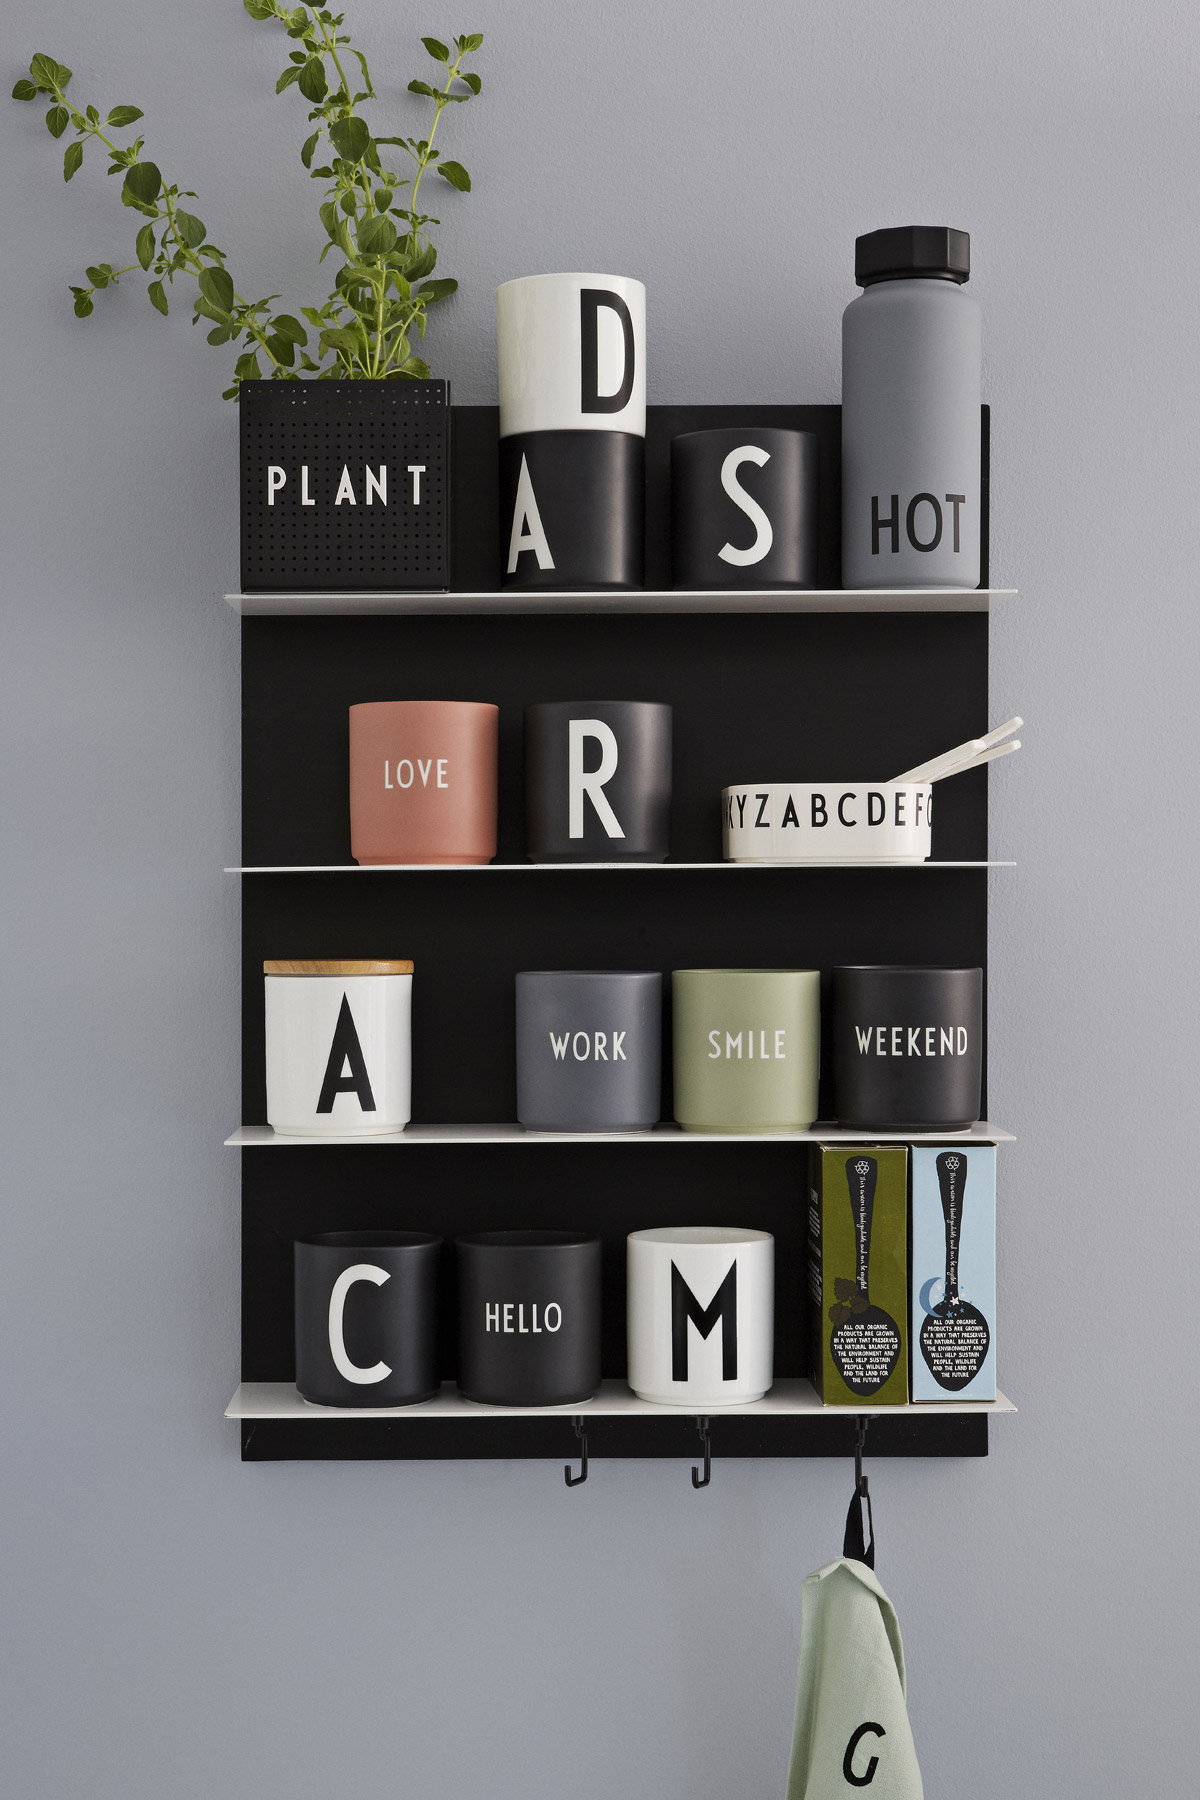 Design Letters AJ Cup, Porzellan Becher "O" , Farbe: Schwarz, Arne Jacobsen 